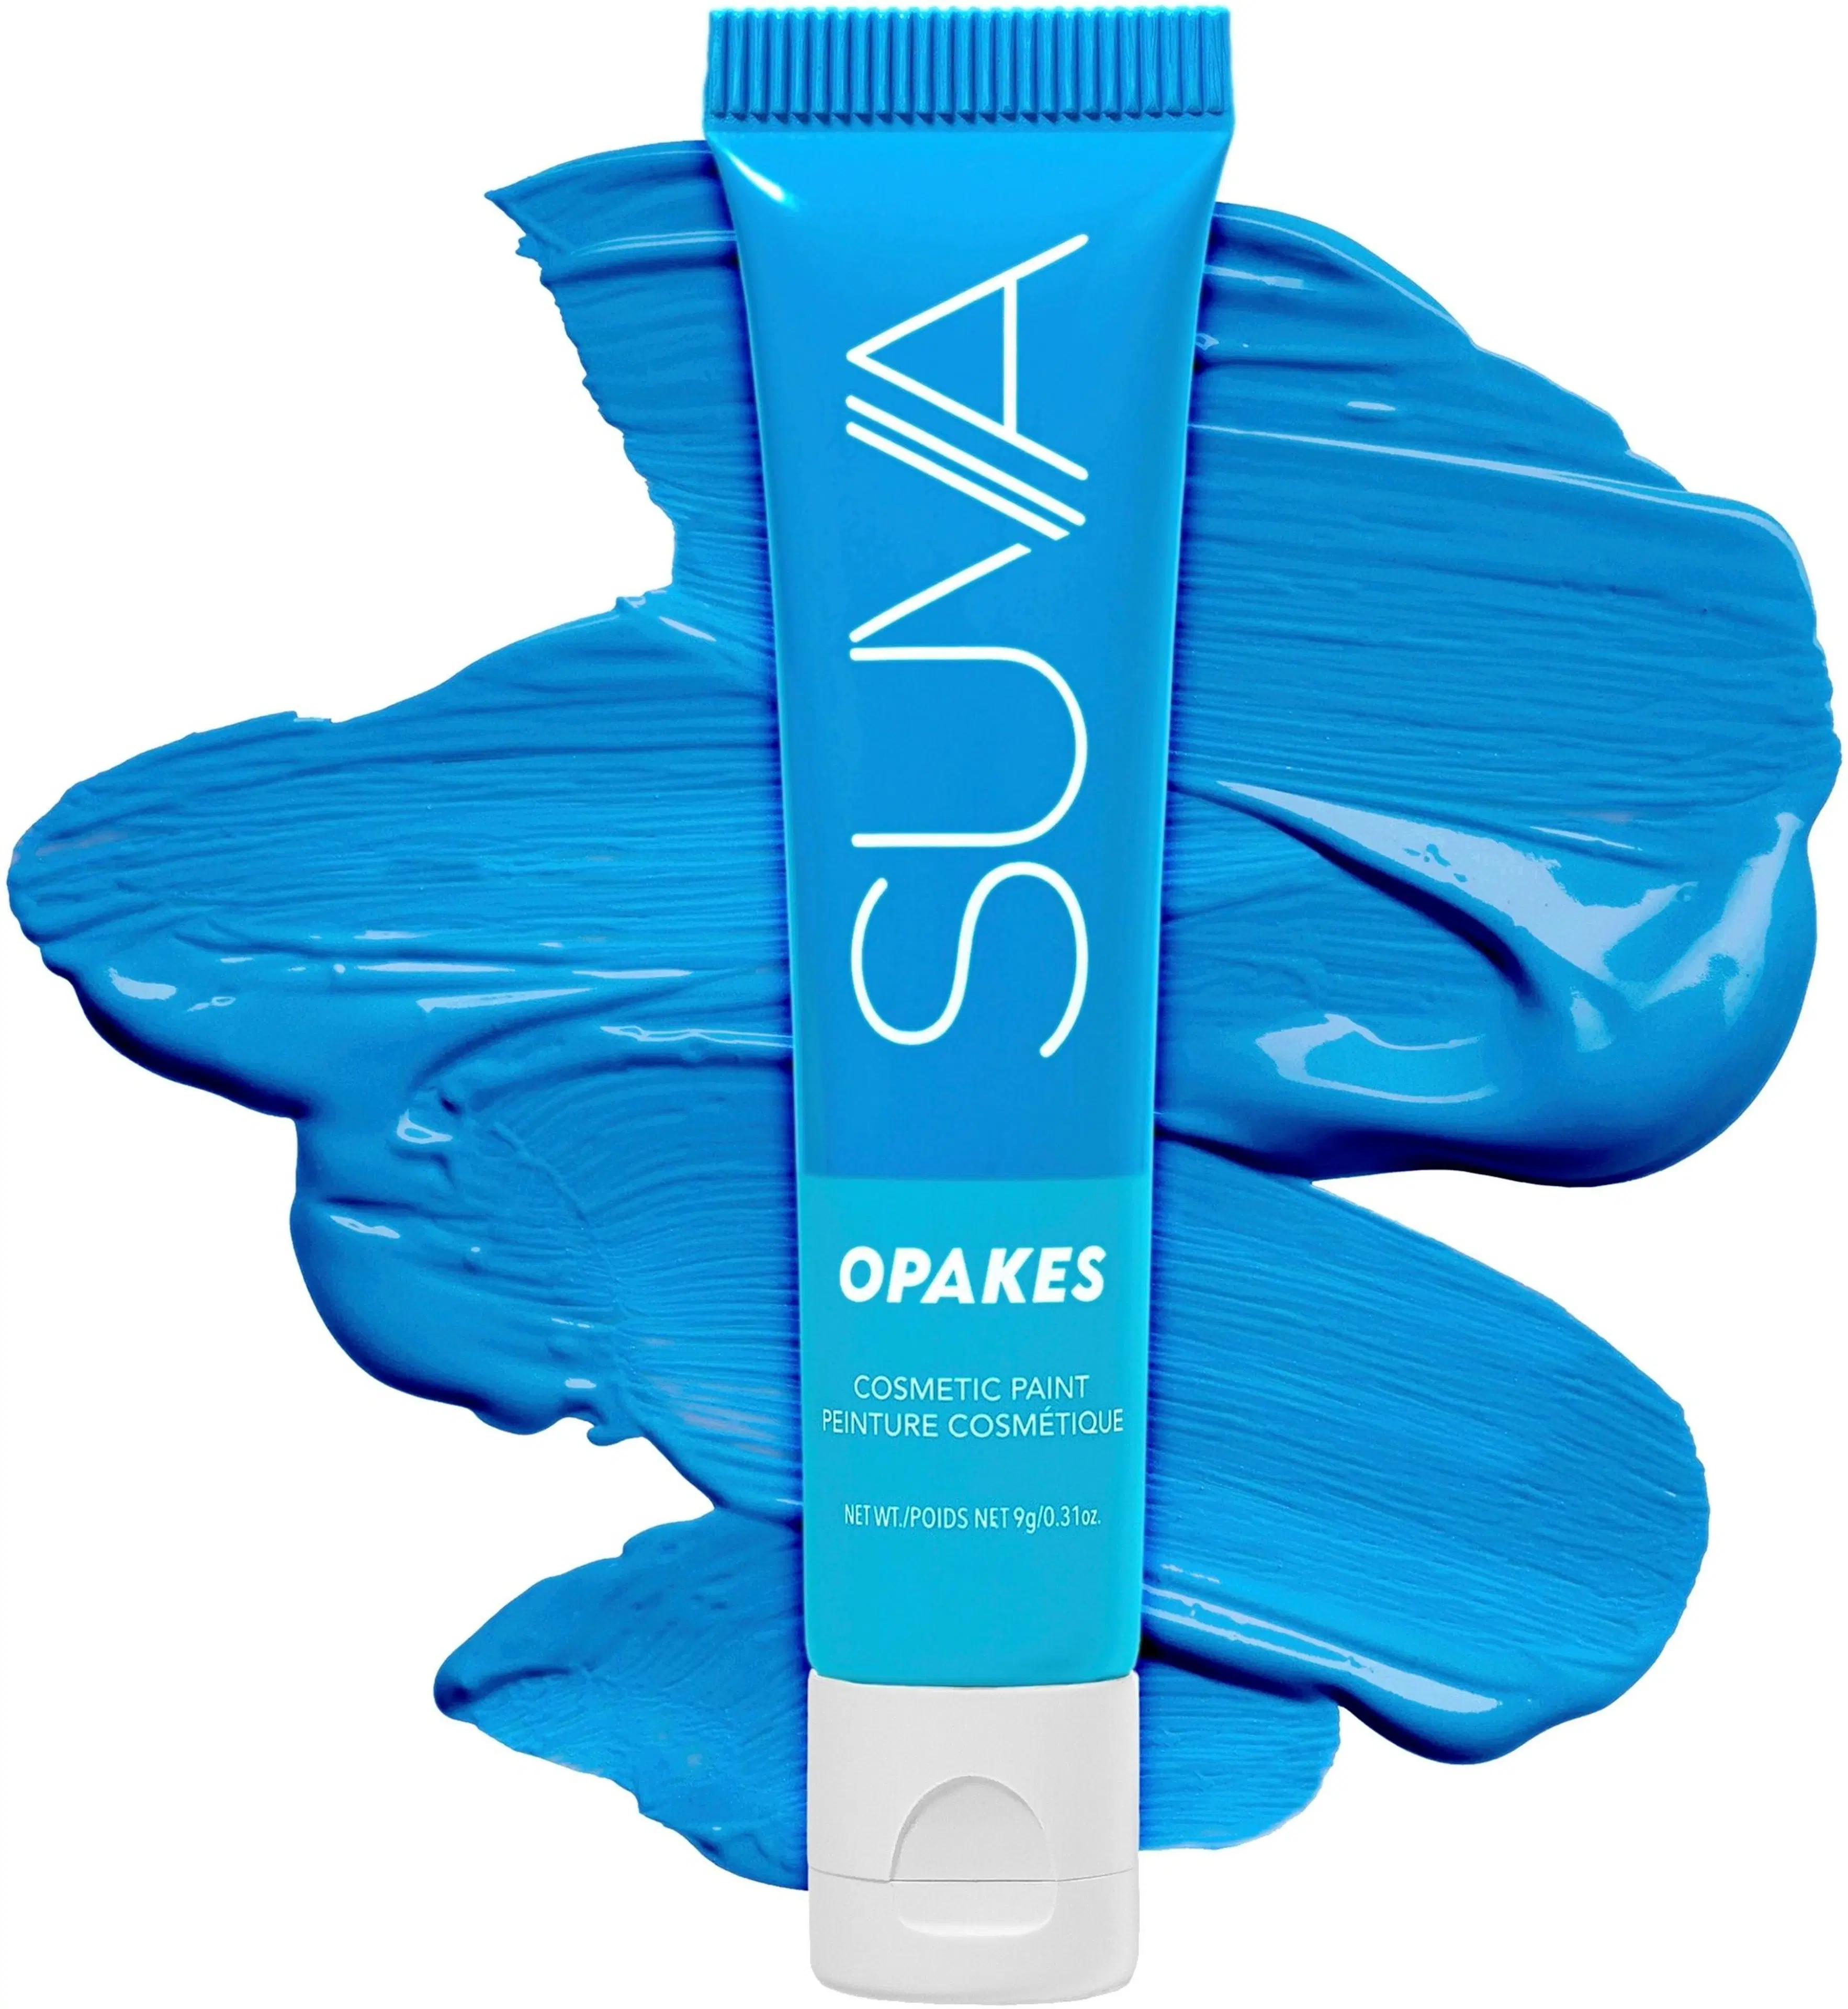 SUVA Beauty Opakes Cosmetic Paint Blafou Blue väri 9g